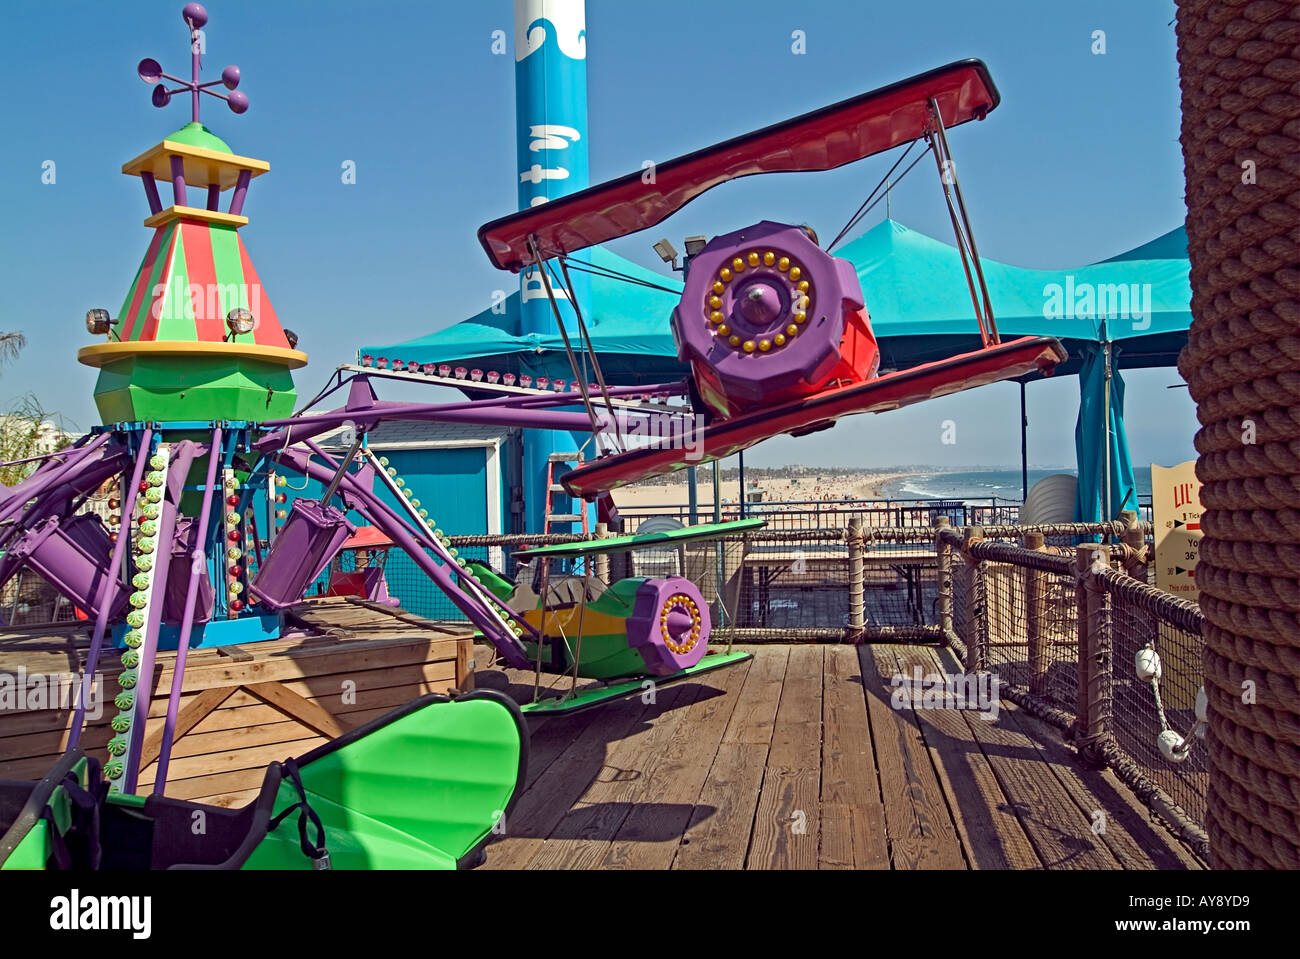 Santa Monica California, pier rides, boardwalk airplanes, child, children, recreation Stock Photo